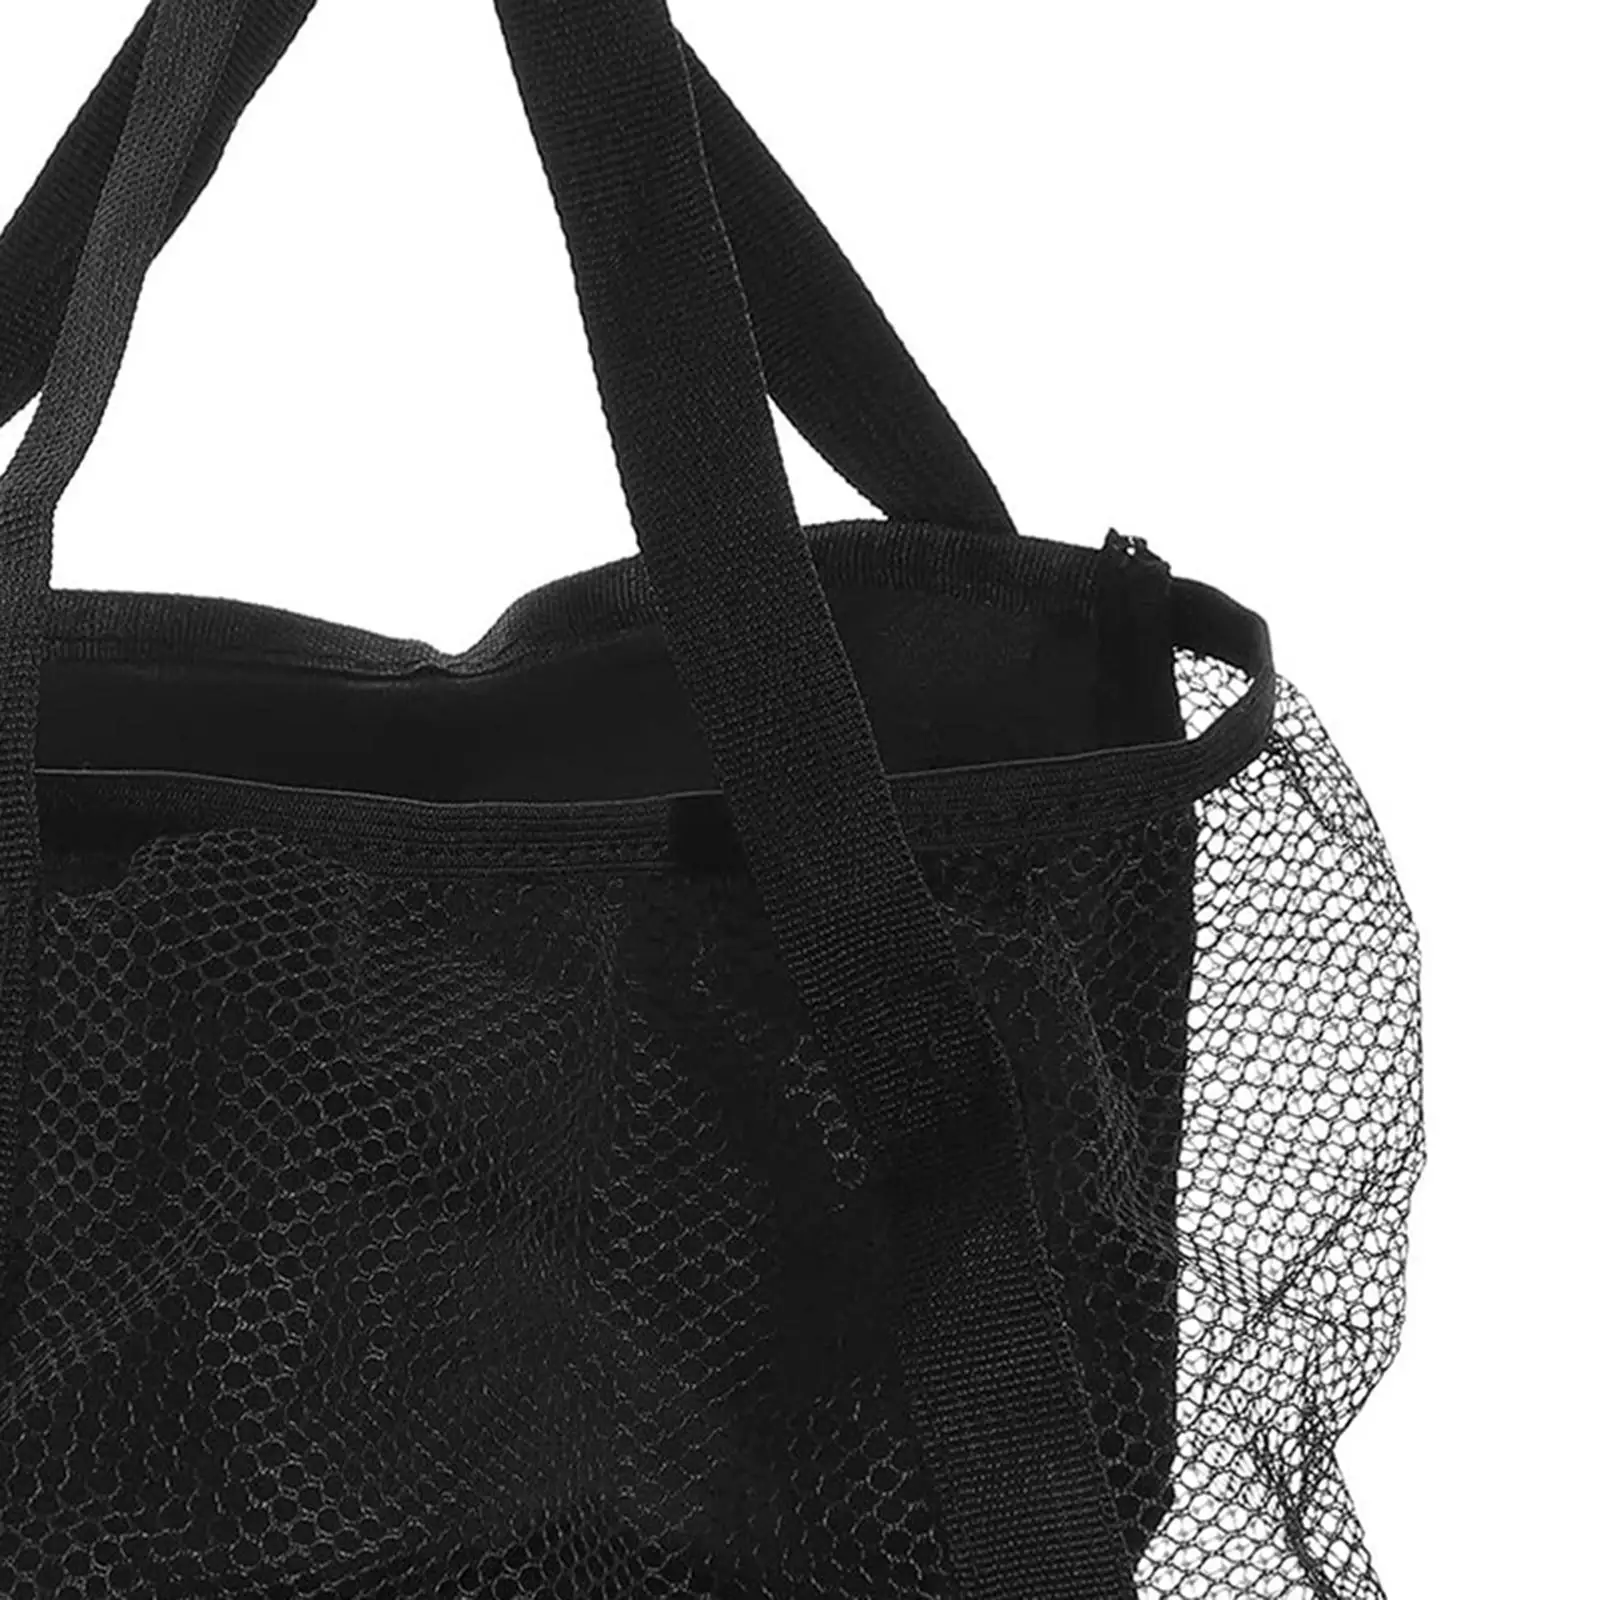 Single Bowling Ball Bag Bowling Tote Portable Oxford Cloth Handbag for Gym